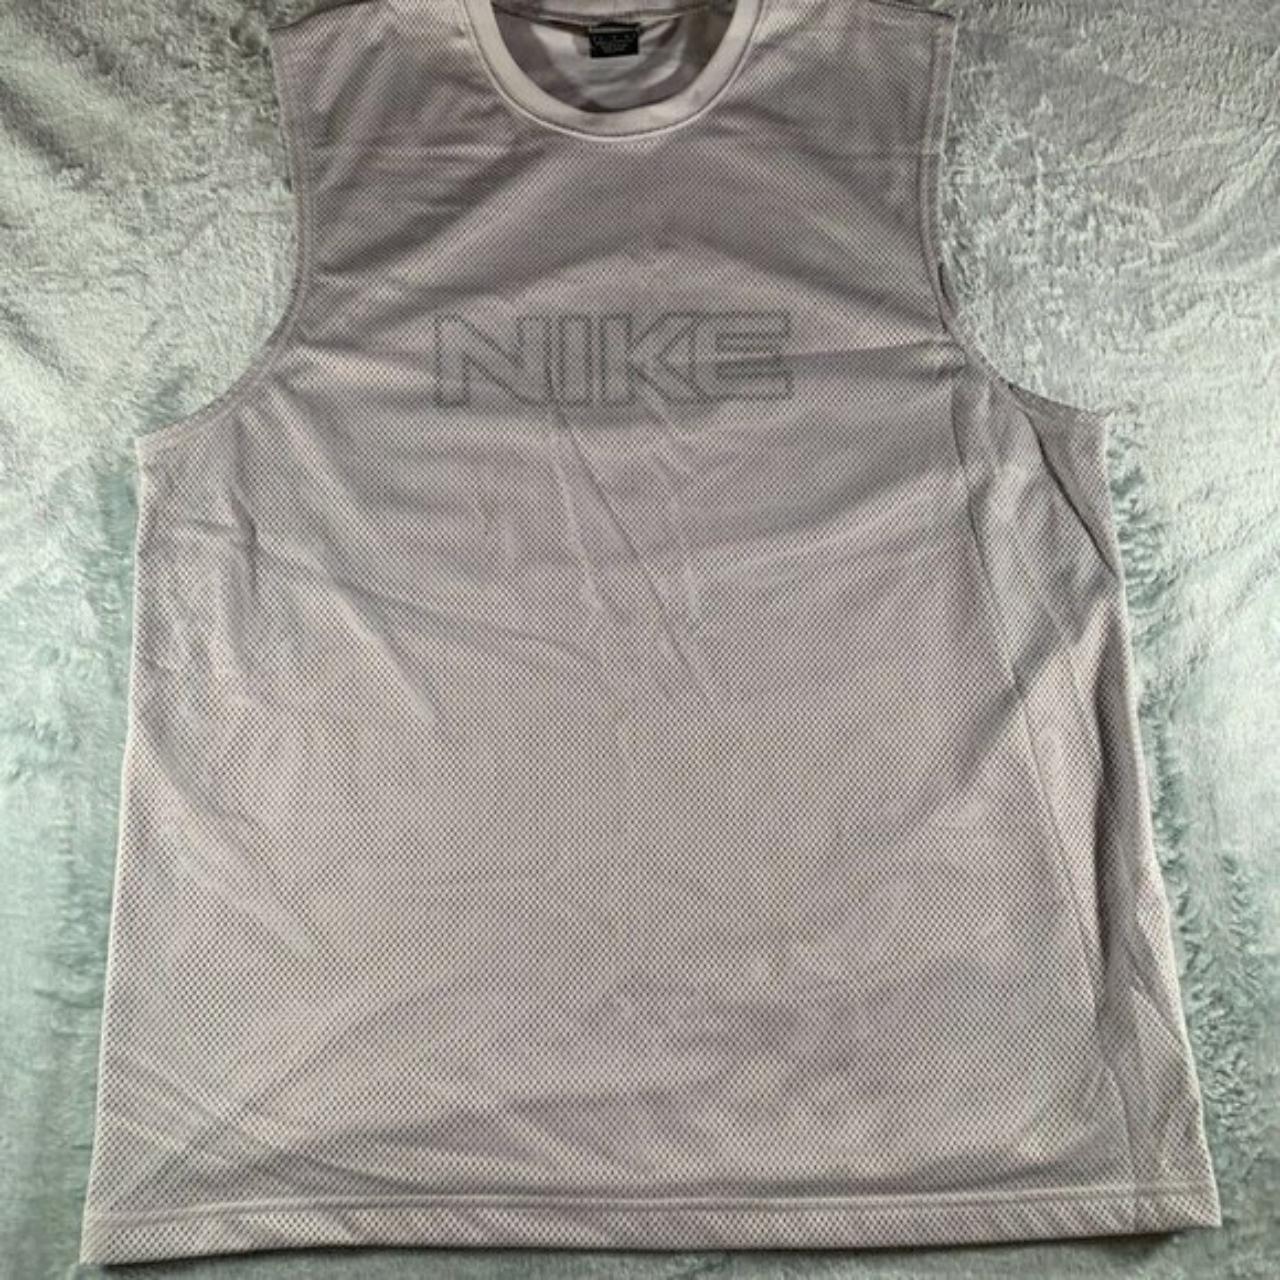 Product Image 1 - NIKE White Mesh/Nylon Jersey Basketball Workout